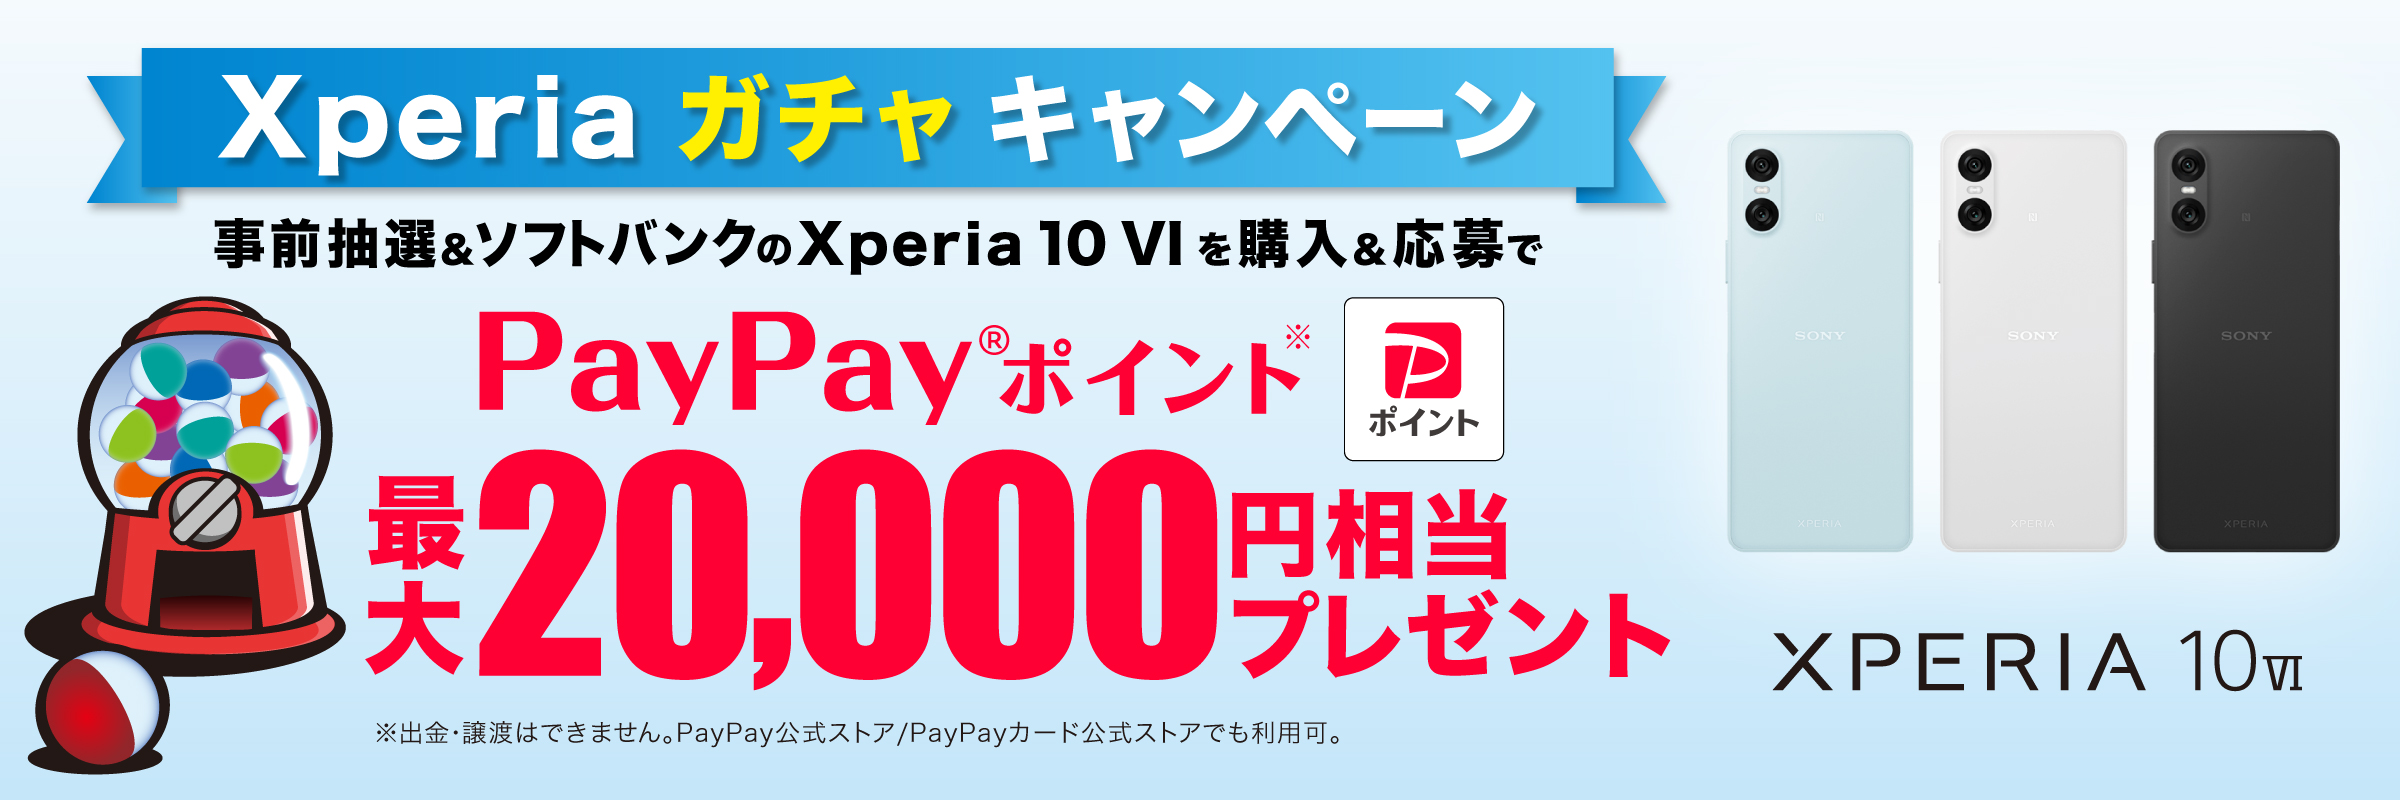 Xperia 10 VI ガチャキャンペーン